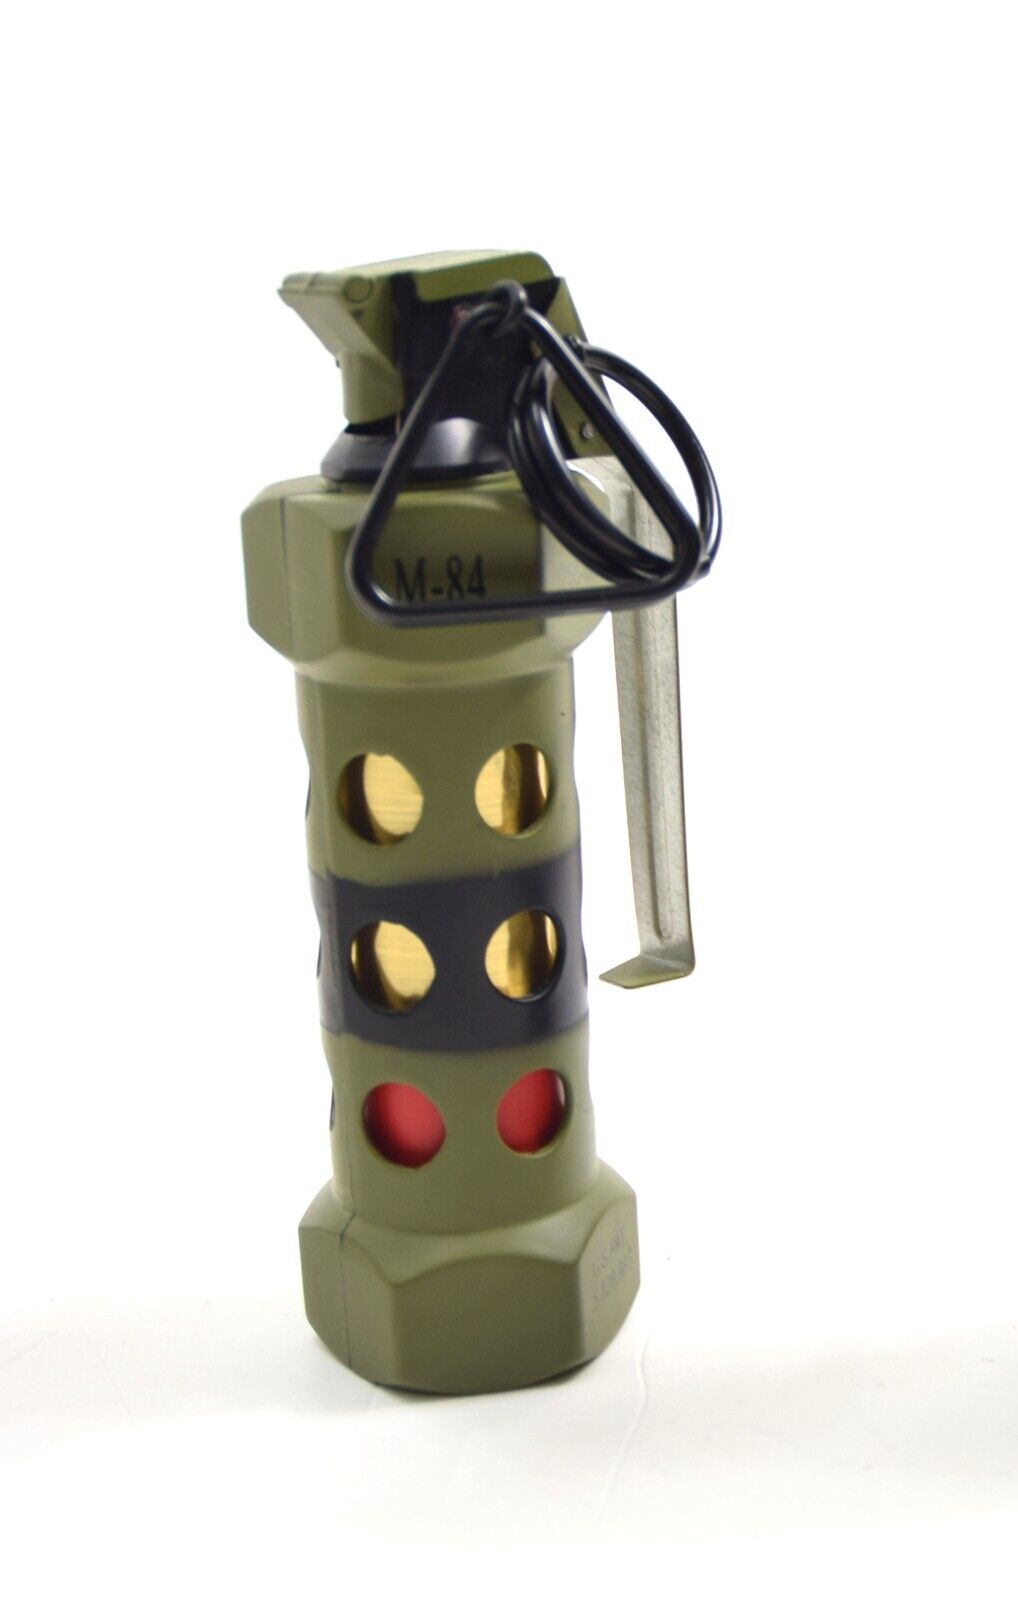 Replica 1:1 Scale M84 Stun Grenade US Army Flash Bang SWAT Lighter Metal Dummy